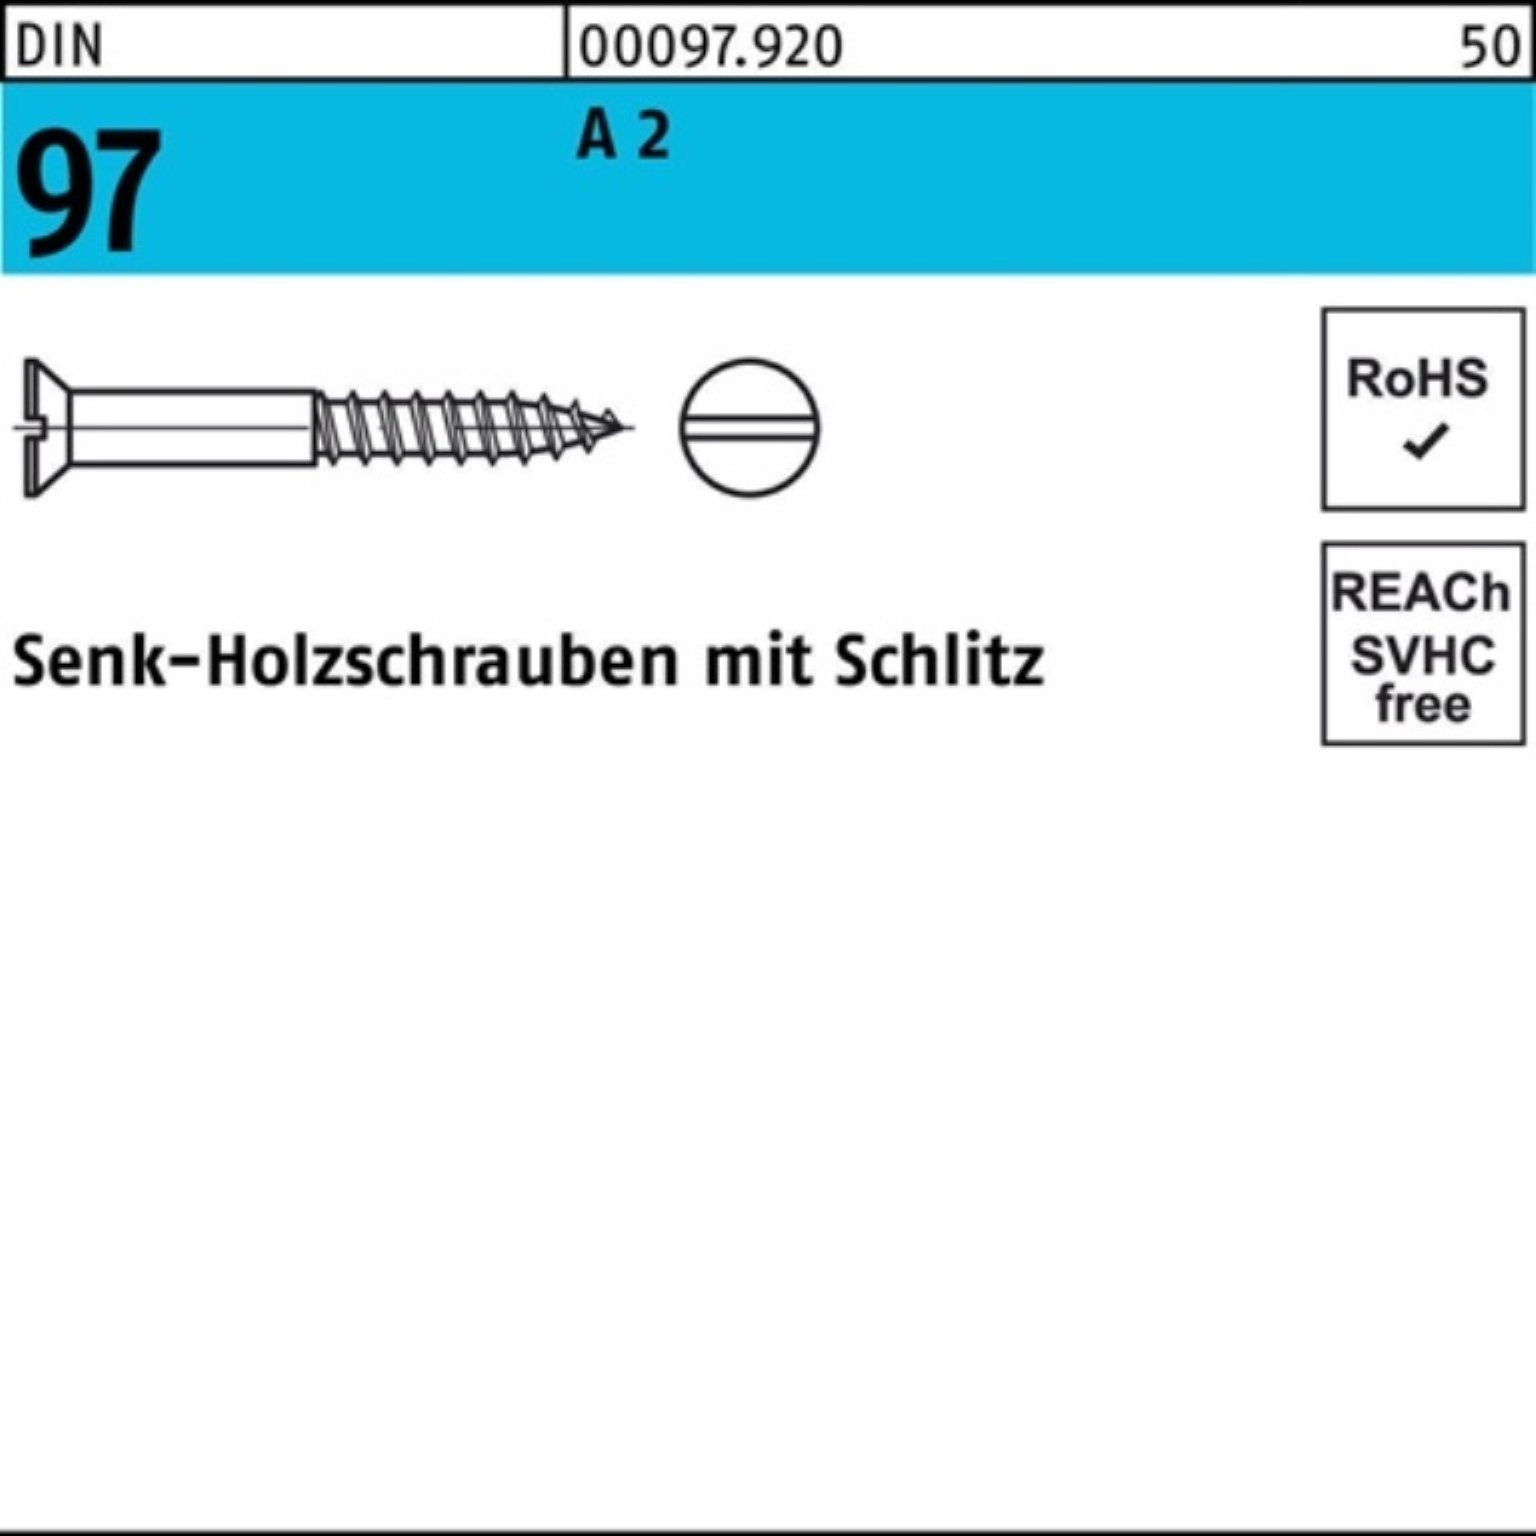 Stück Schraube DIN A 2 Pack SEKO 10 97 3x DIN Schlitz Reyher Holzschraube 9 200 200er